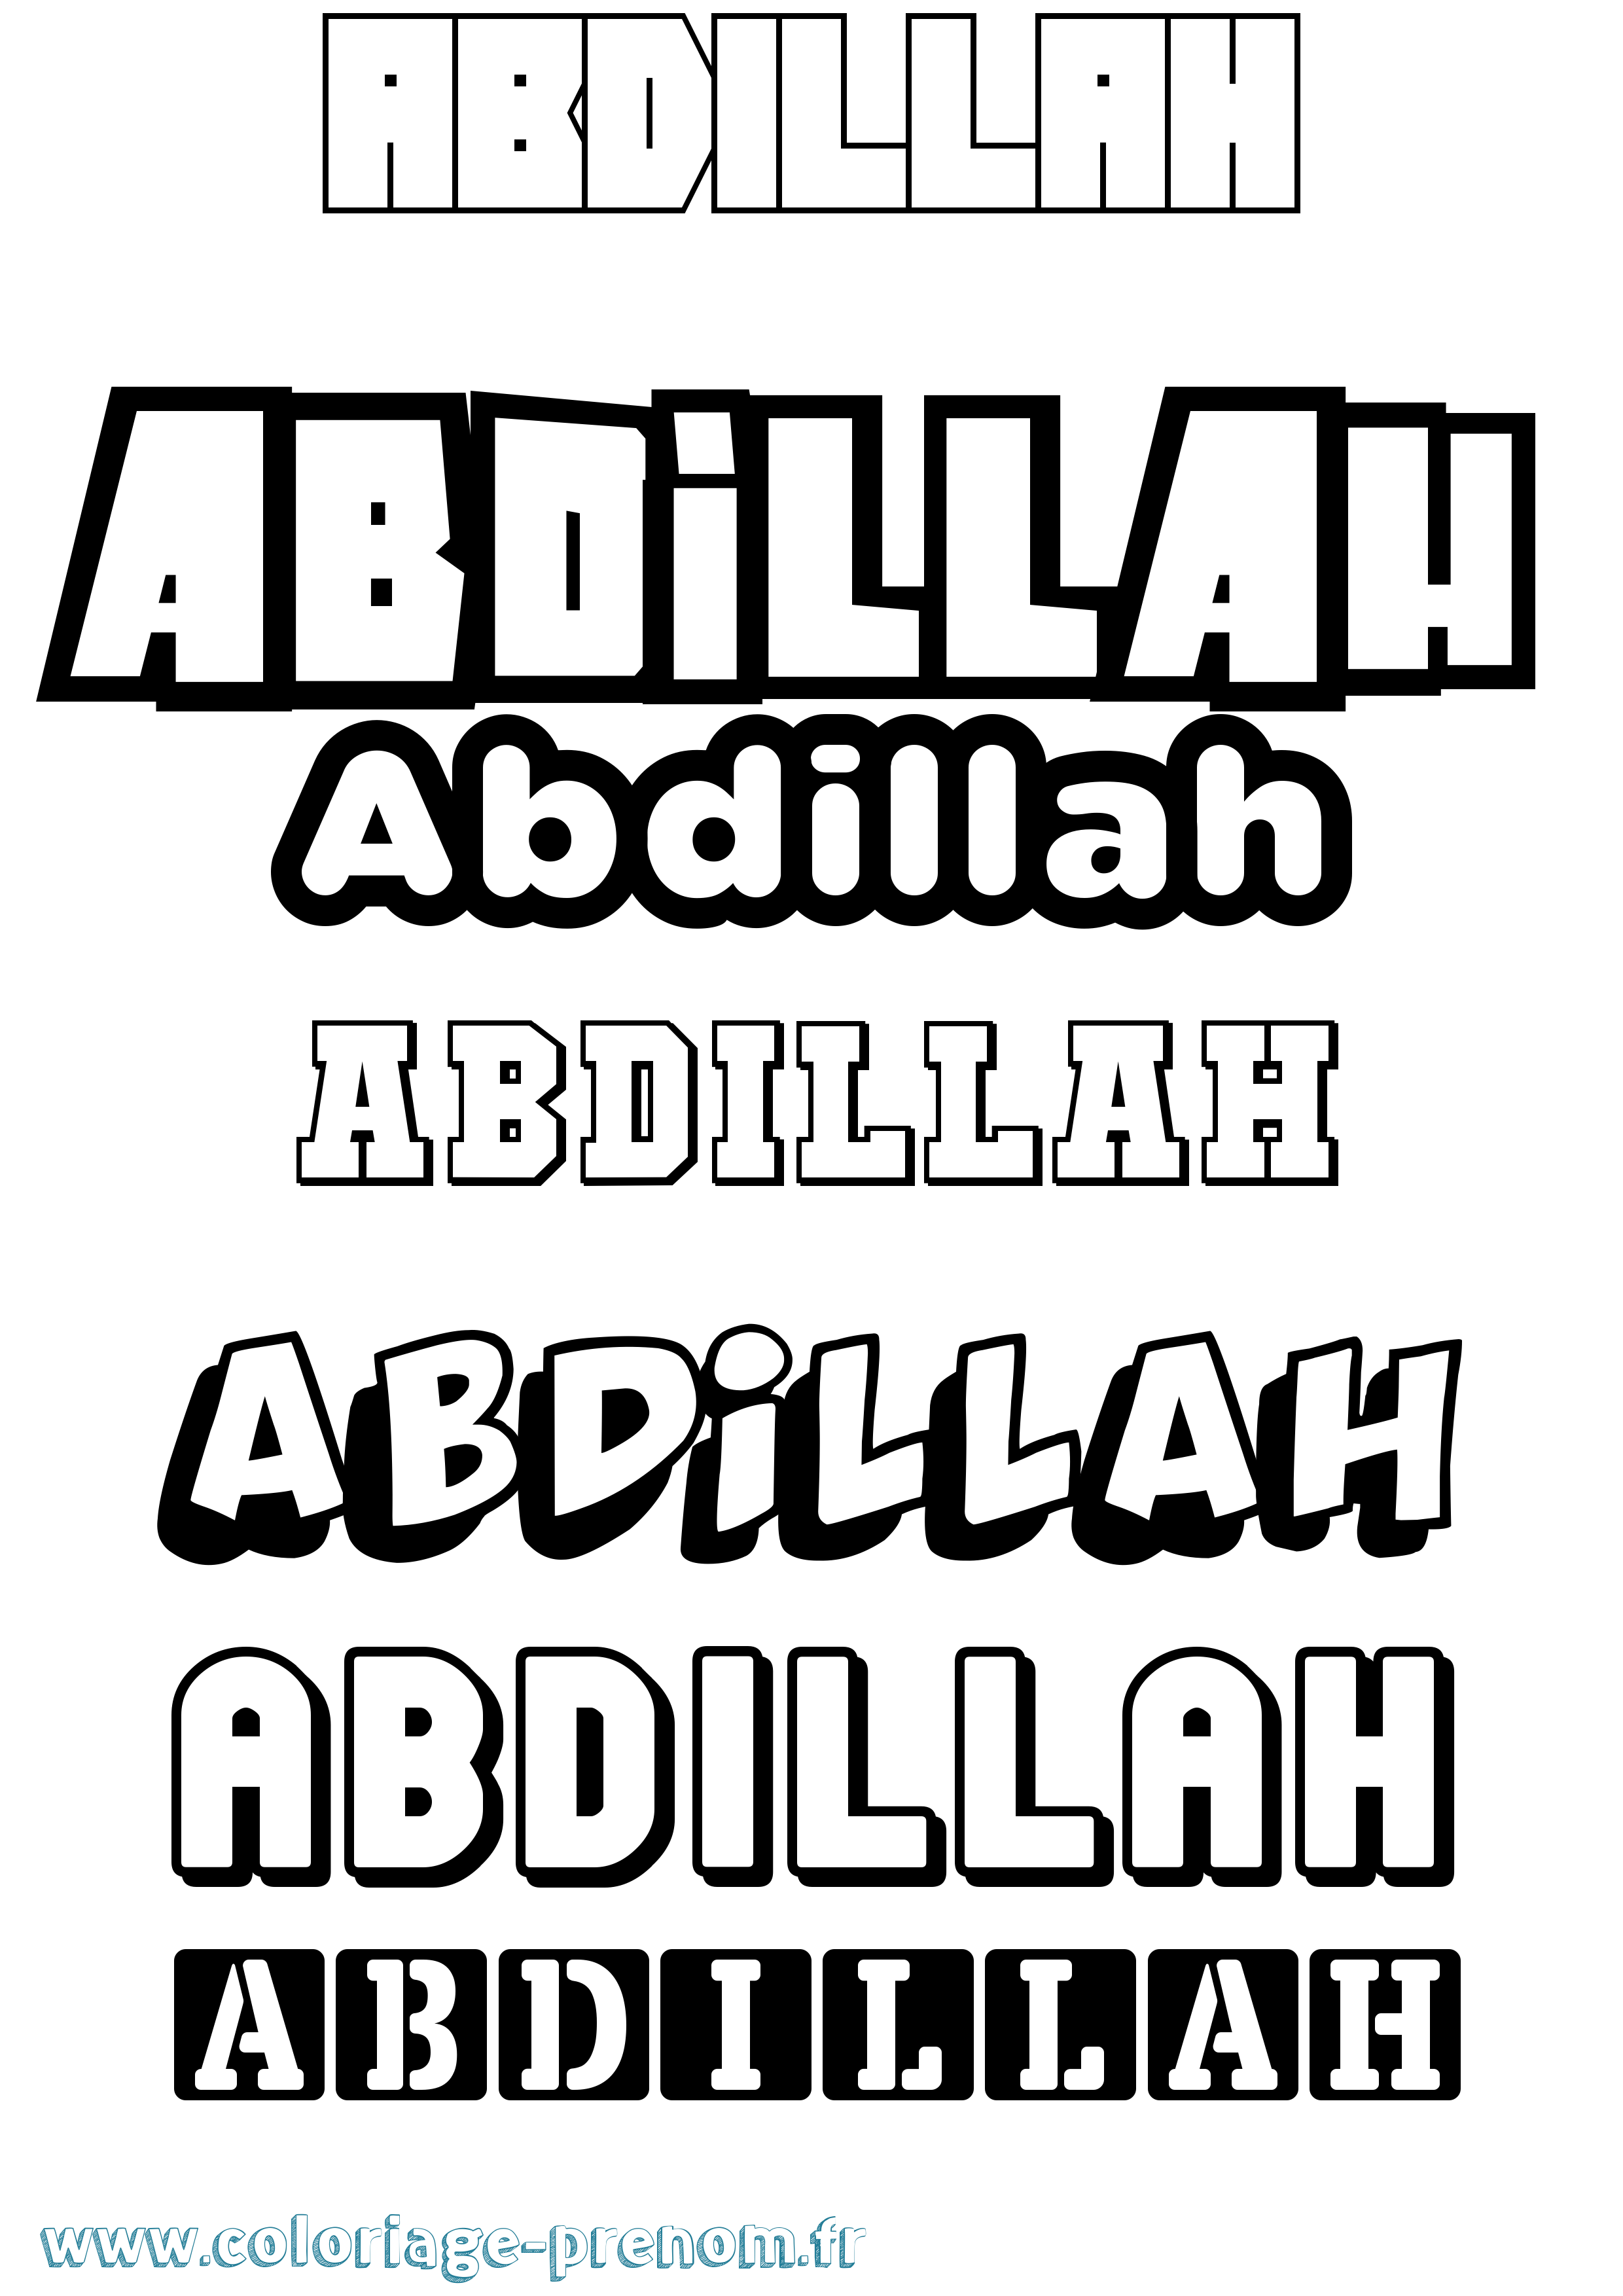 Coloriage prénom Abdillah Simple